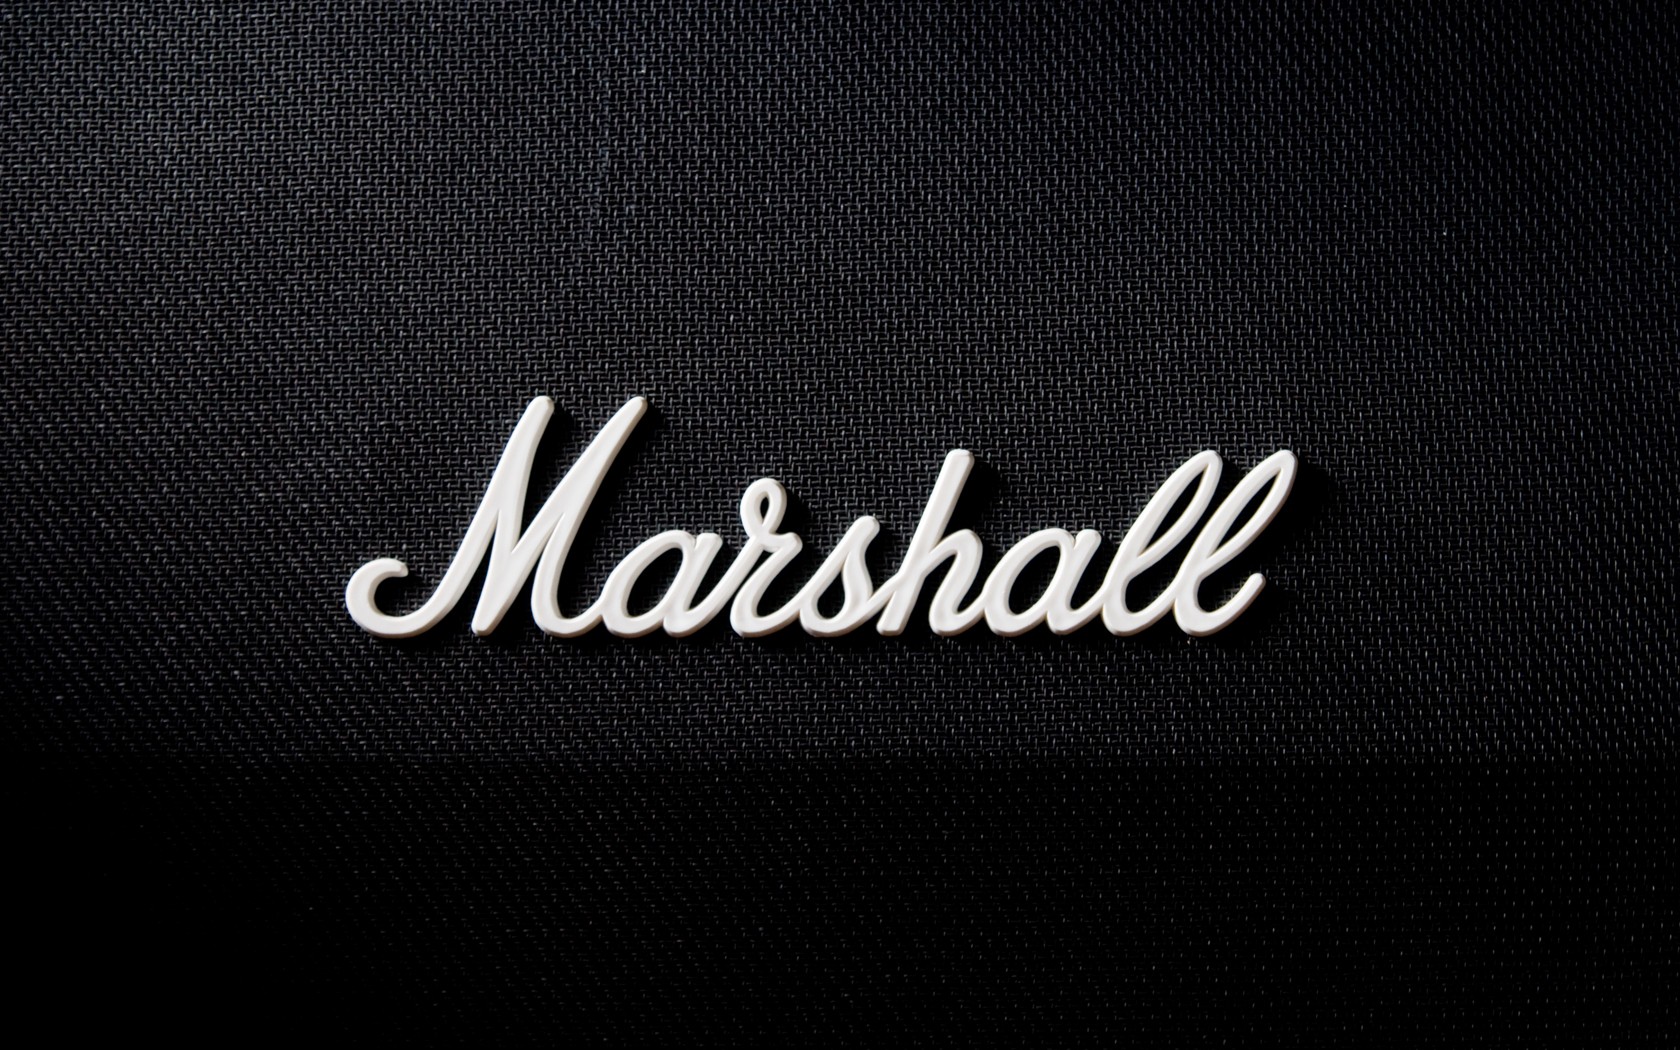 General 1680x1050 Marshall monochrome typography texture digital art minimalism